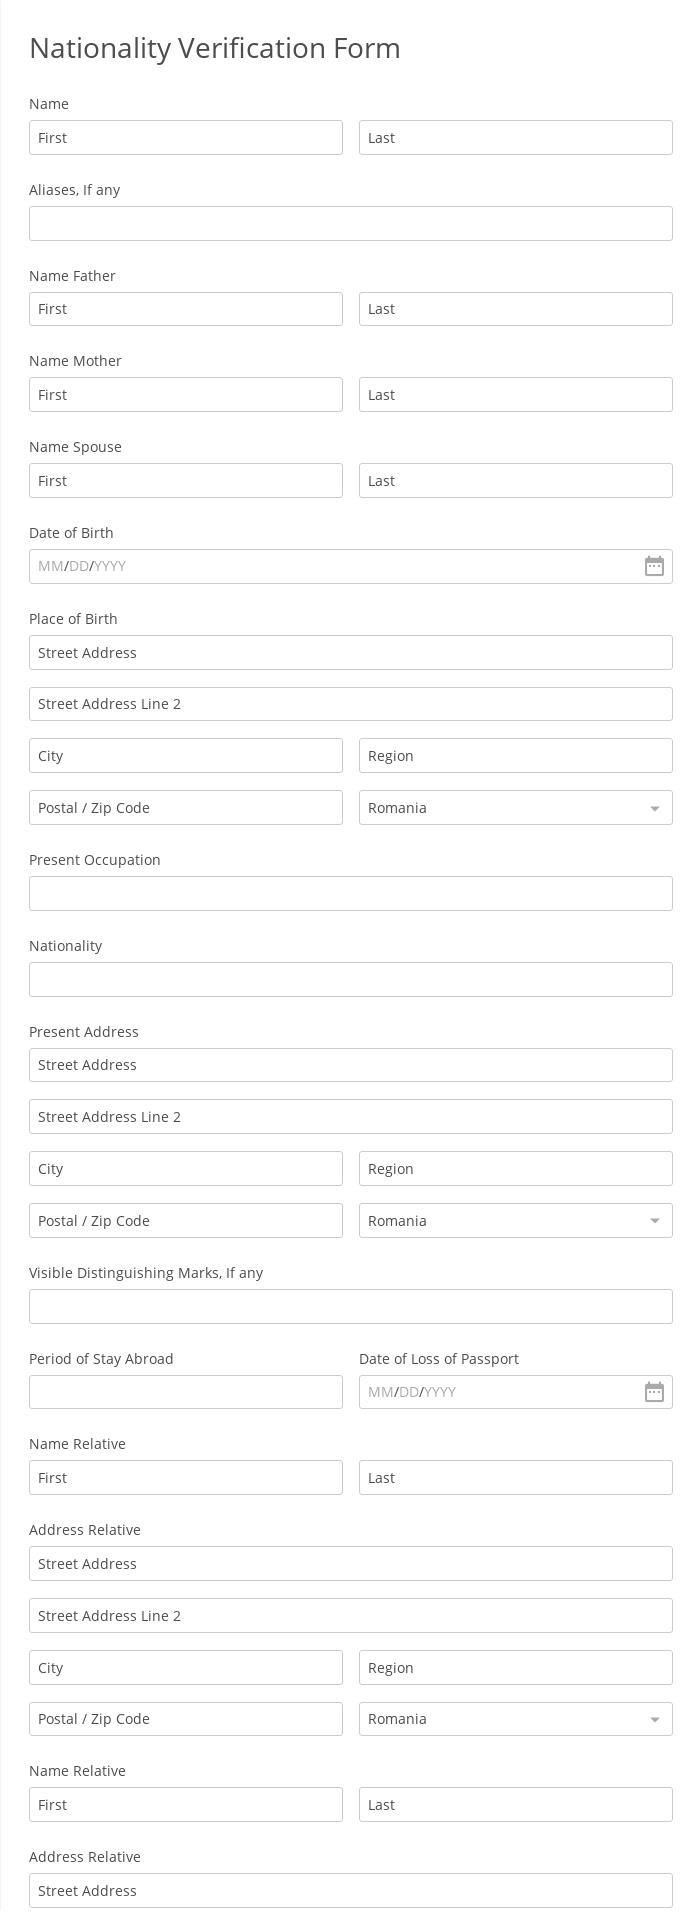 Nationality Verification Form